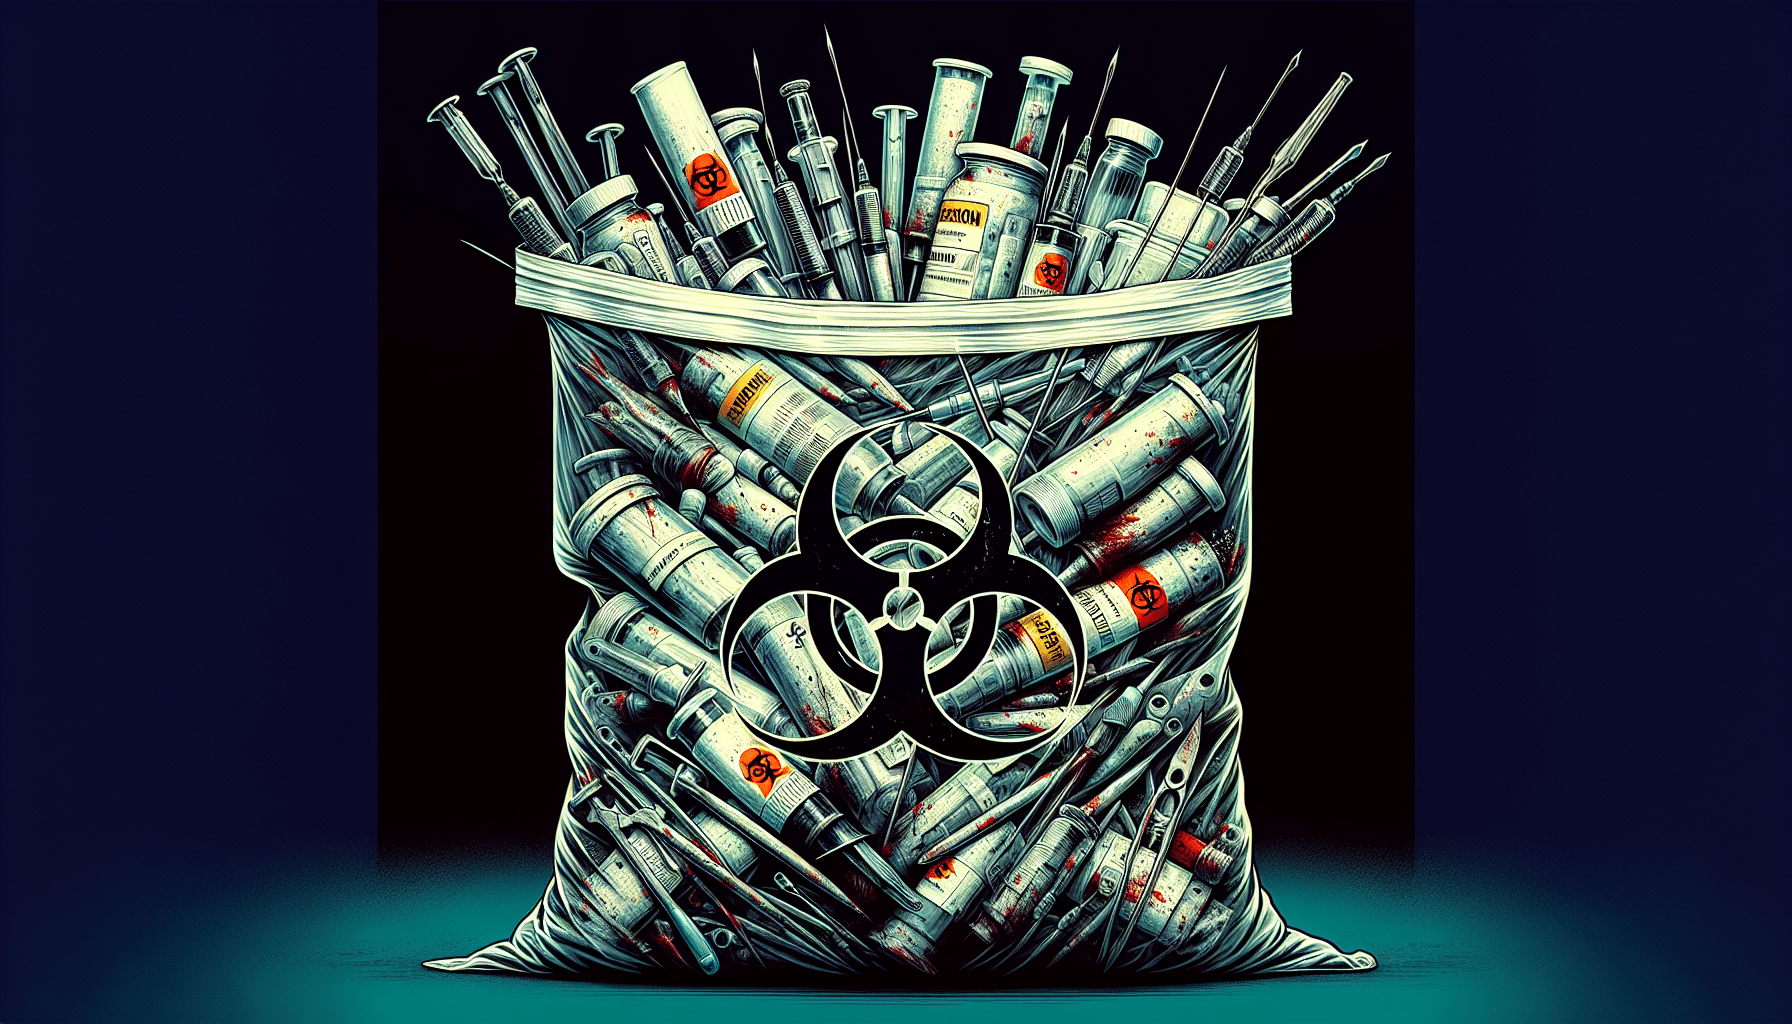 Illustration of a biohazard bag with medical waste